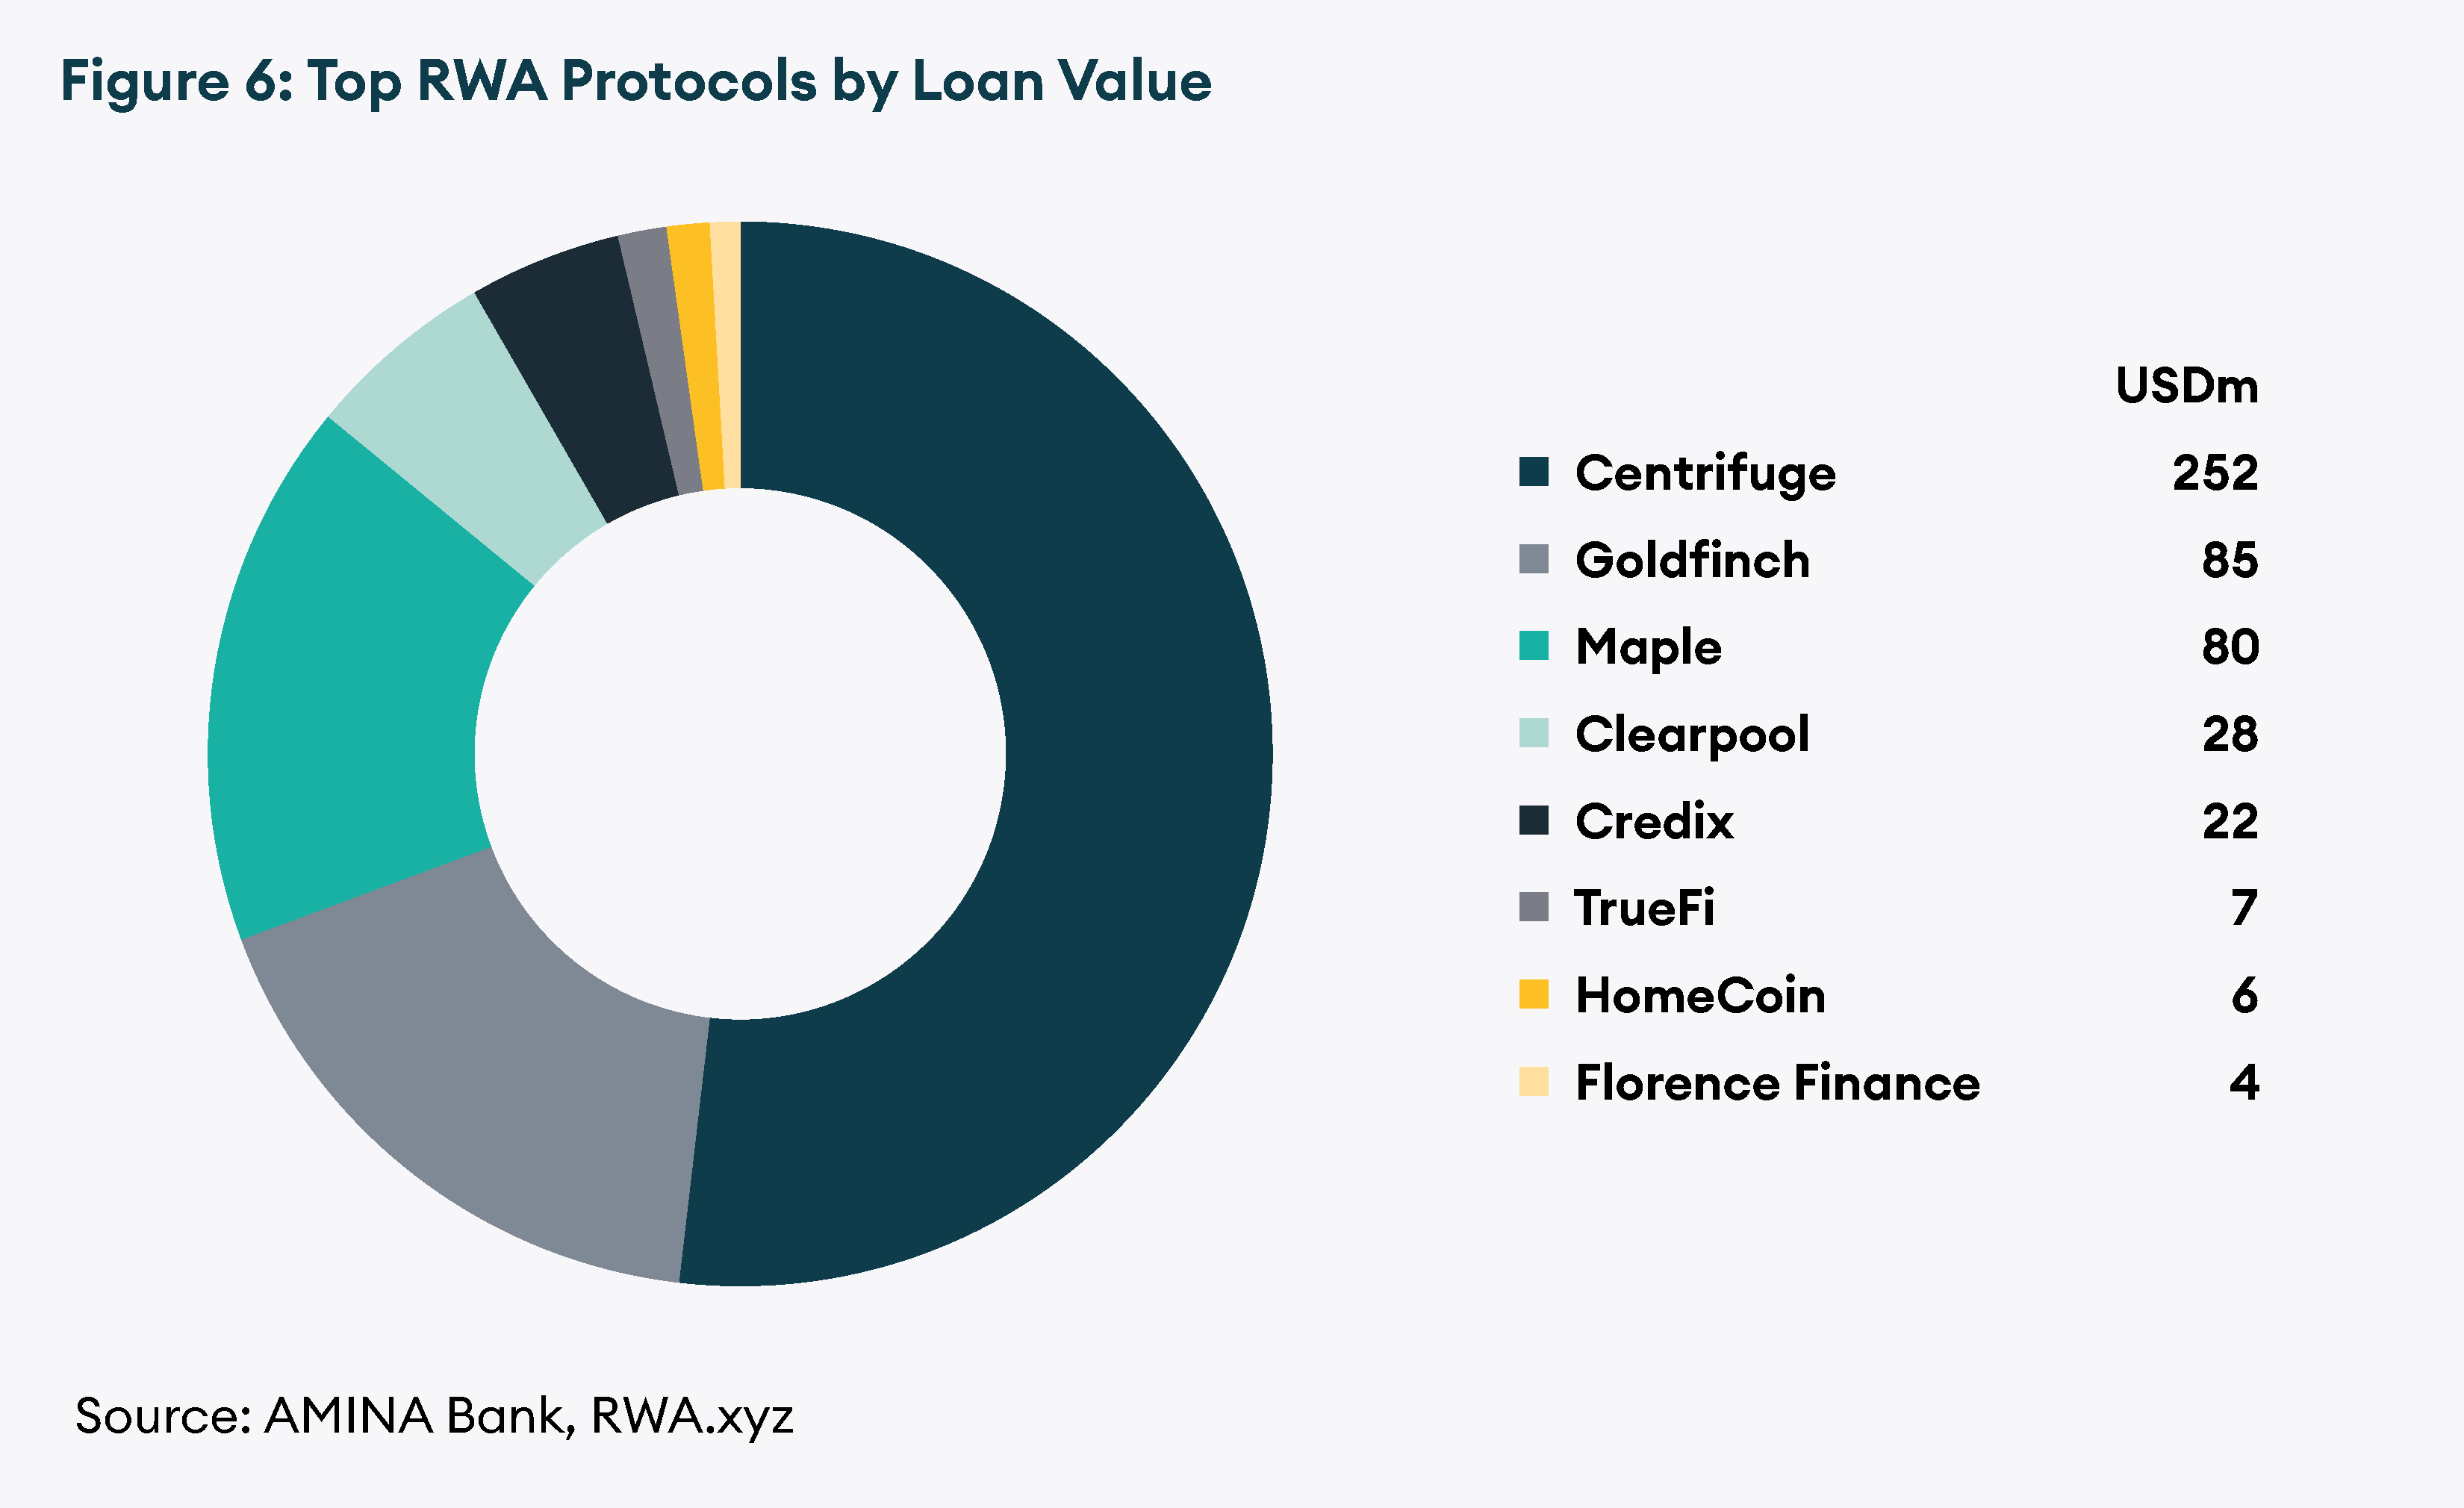 Top RWA Protocols by Loan Value